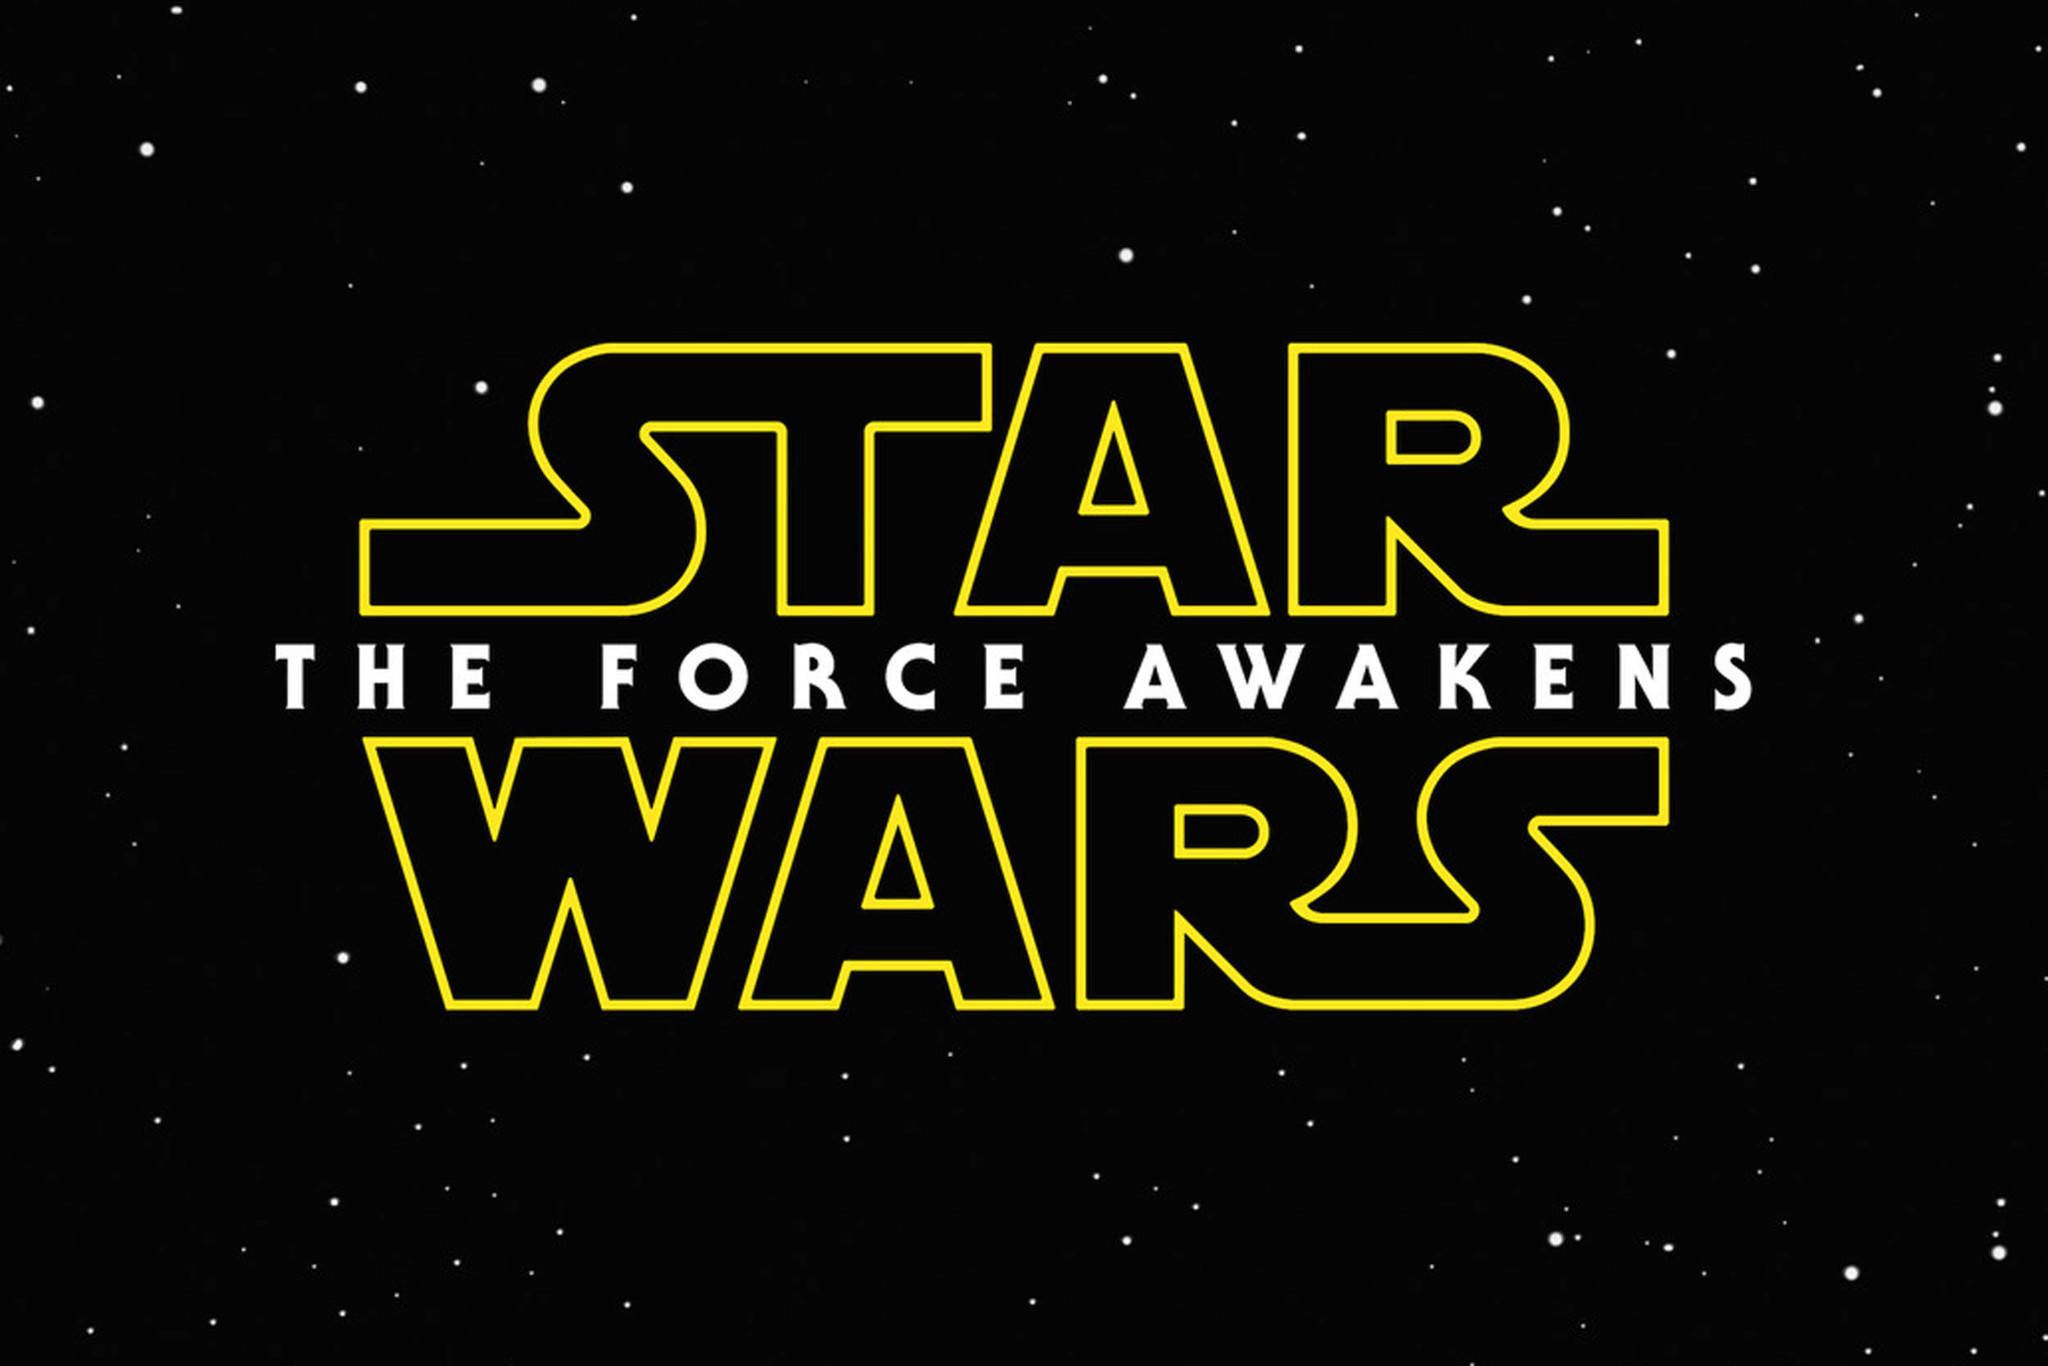 Star-Wars-The-Force-Awakens.jpg